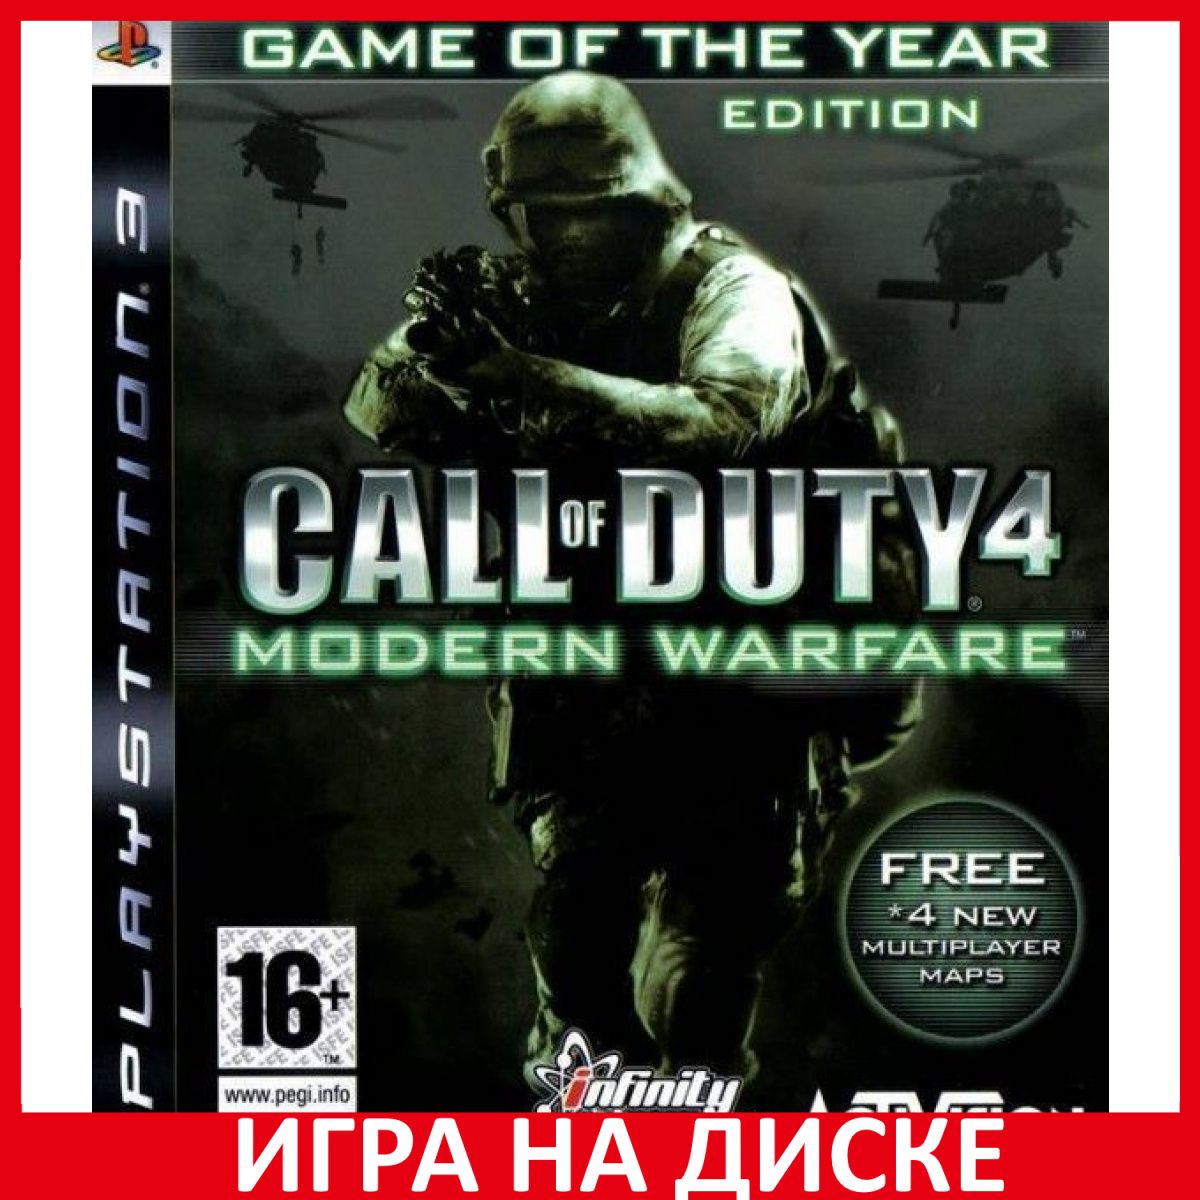 Купить игру кал оф дьюти. Call of Duty 4 Modern Warfare диск. Call of Duty Modern Warfare 3 диск. Call of Duty 4 ps3. Call of Duty ps3.